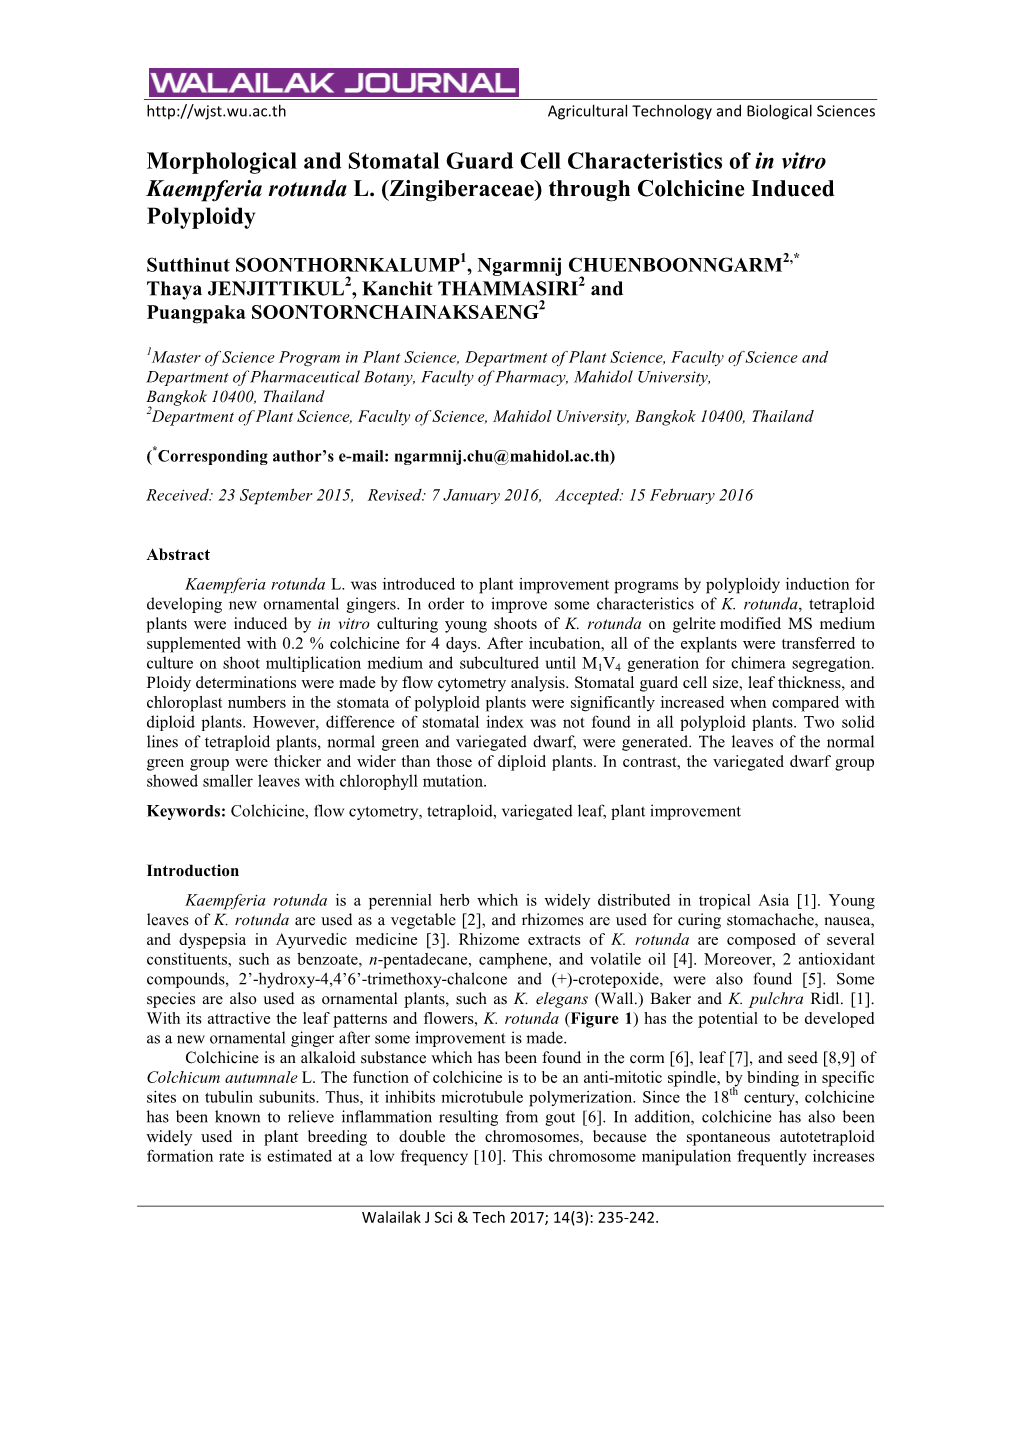 Morphological and Stomatal Guard Cell Characteristics of in Vitro Kaempferia Rotunda L